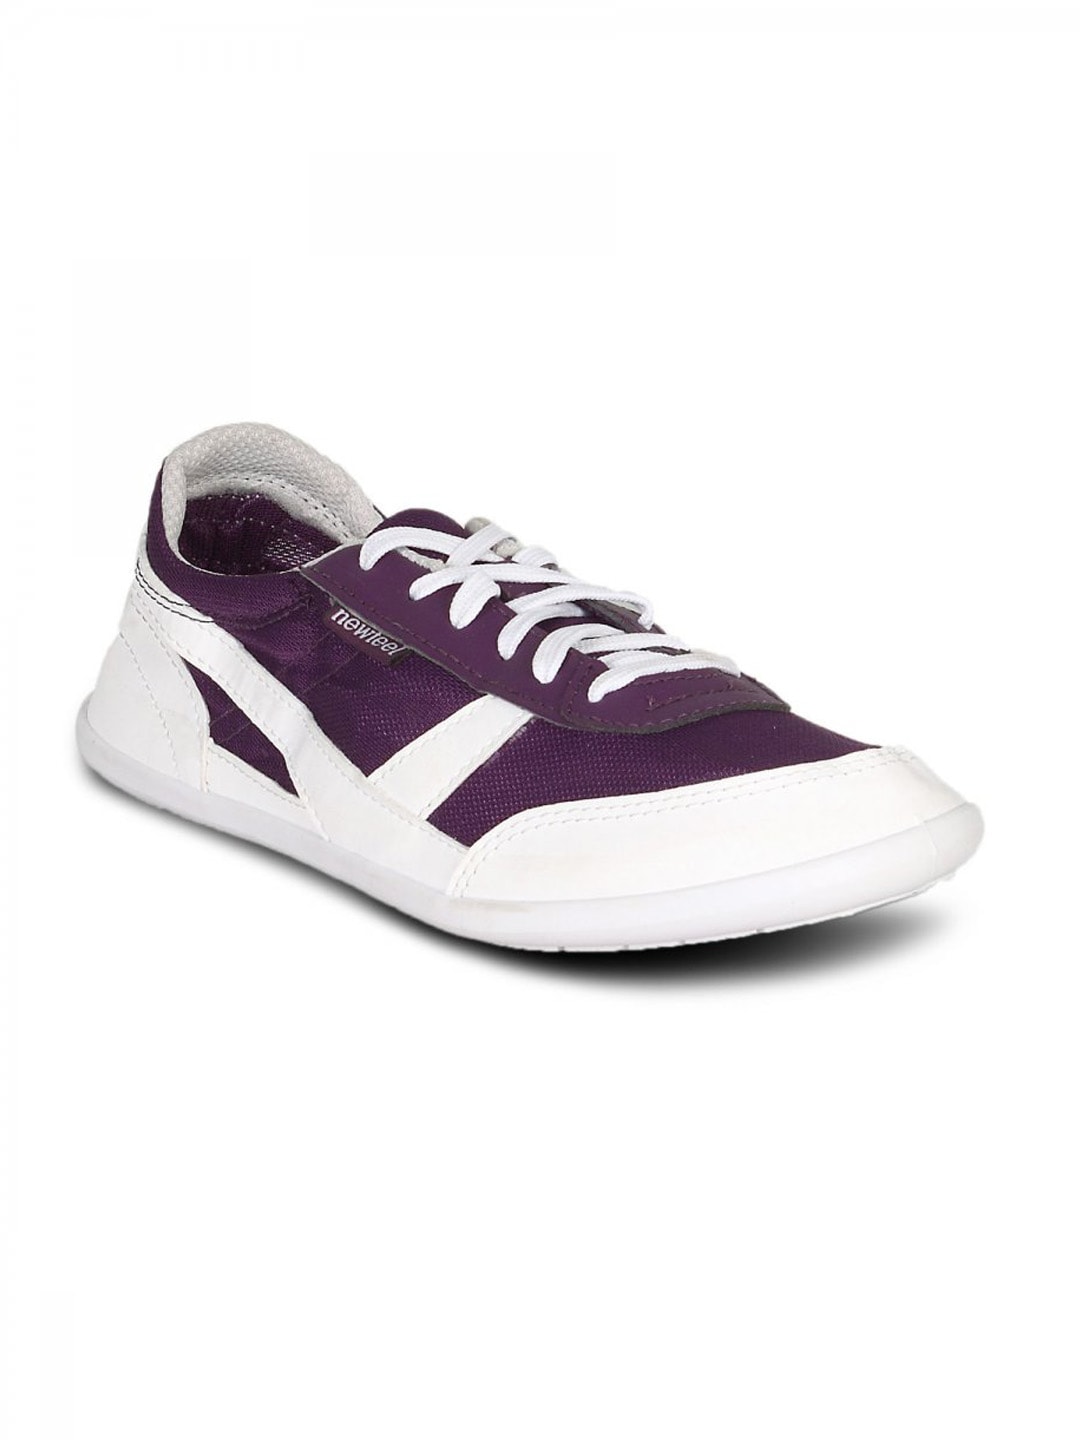 Newfeel Unisex Purple White Shoes